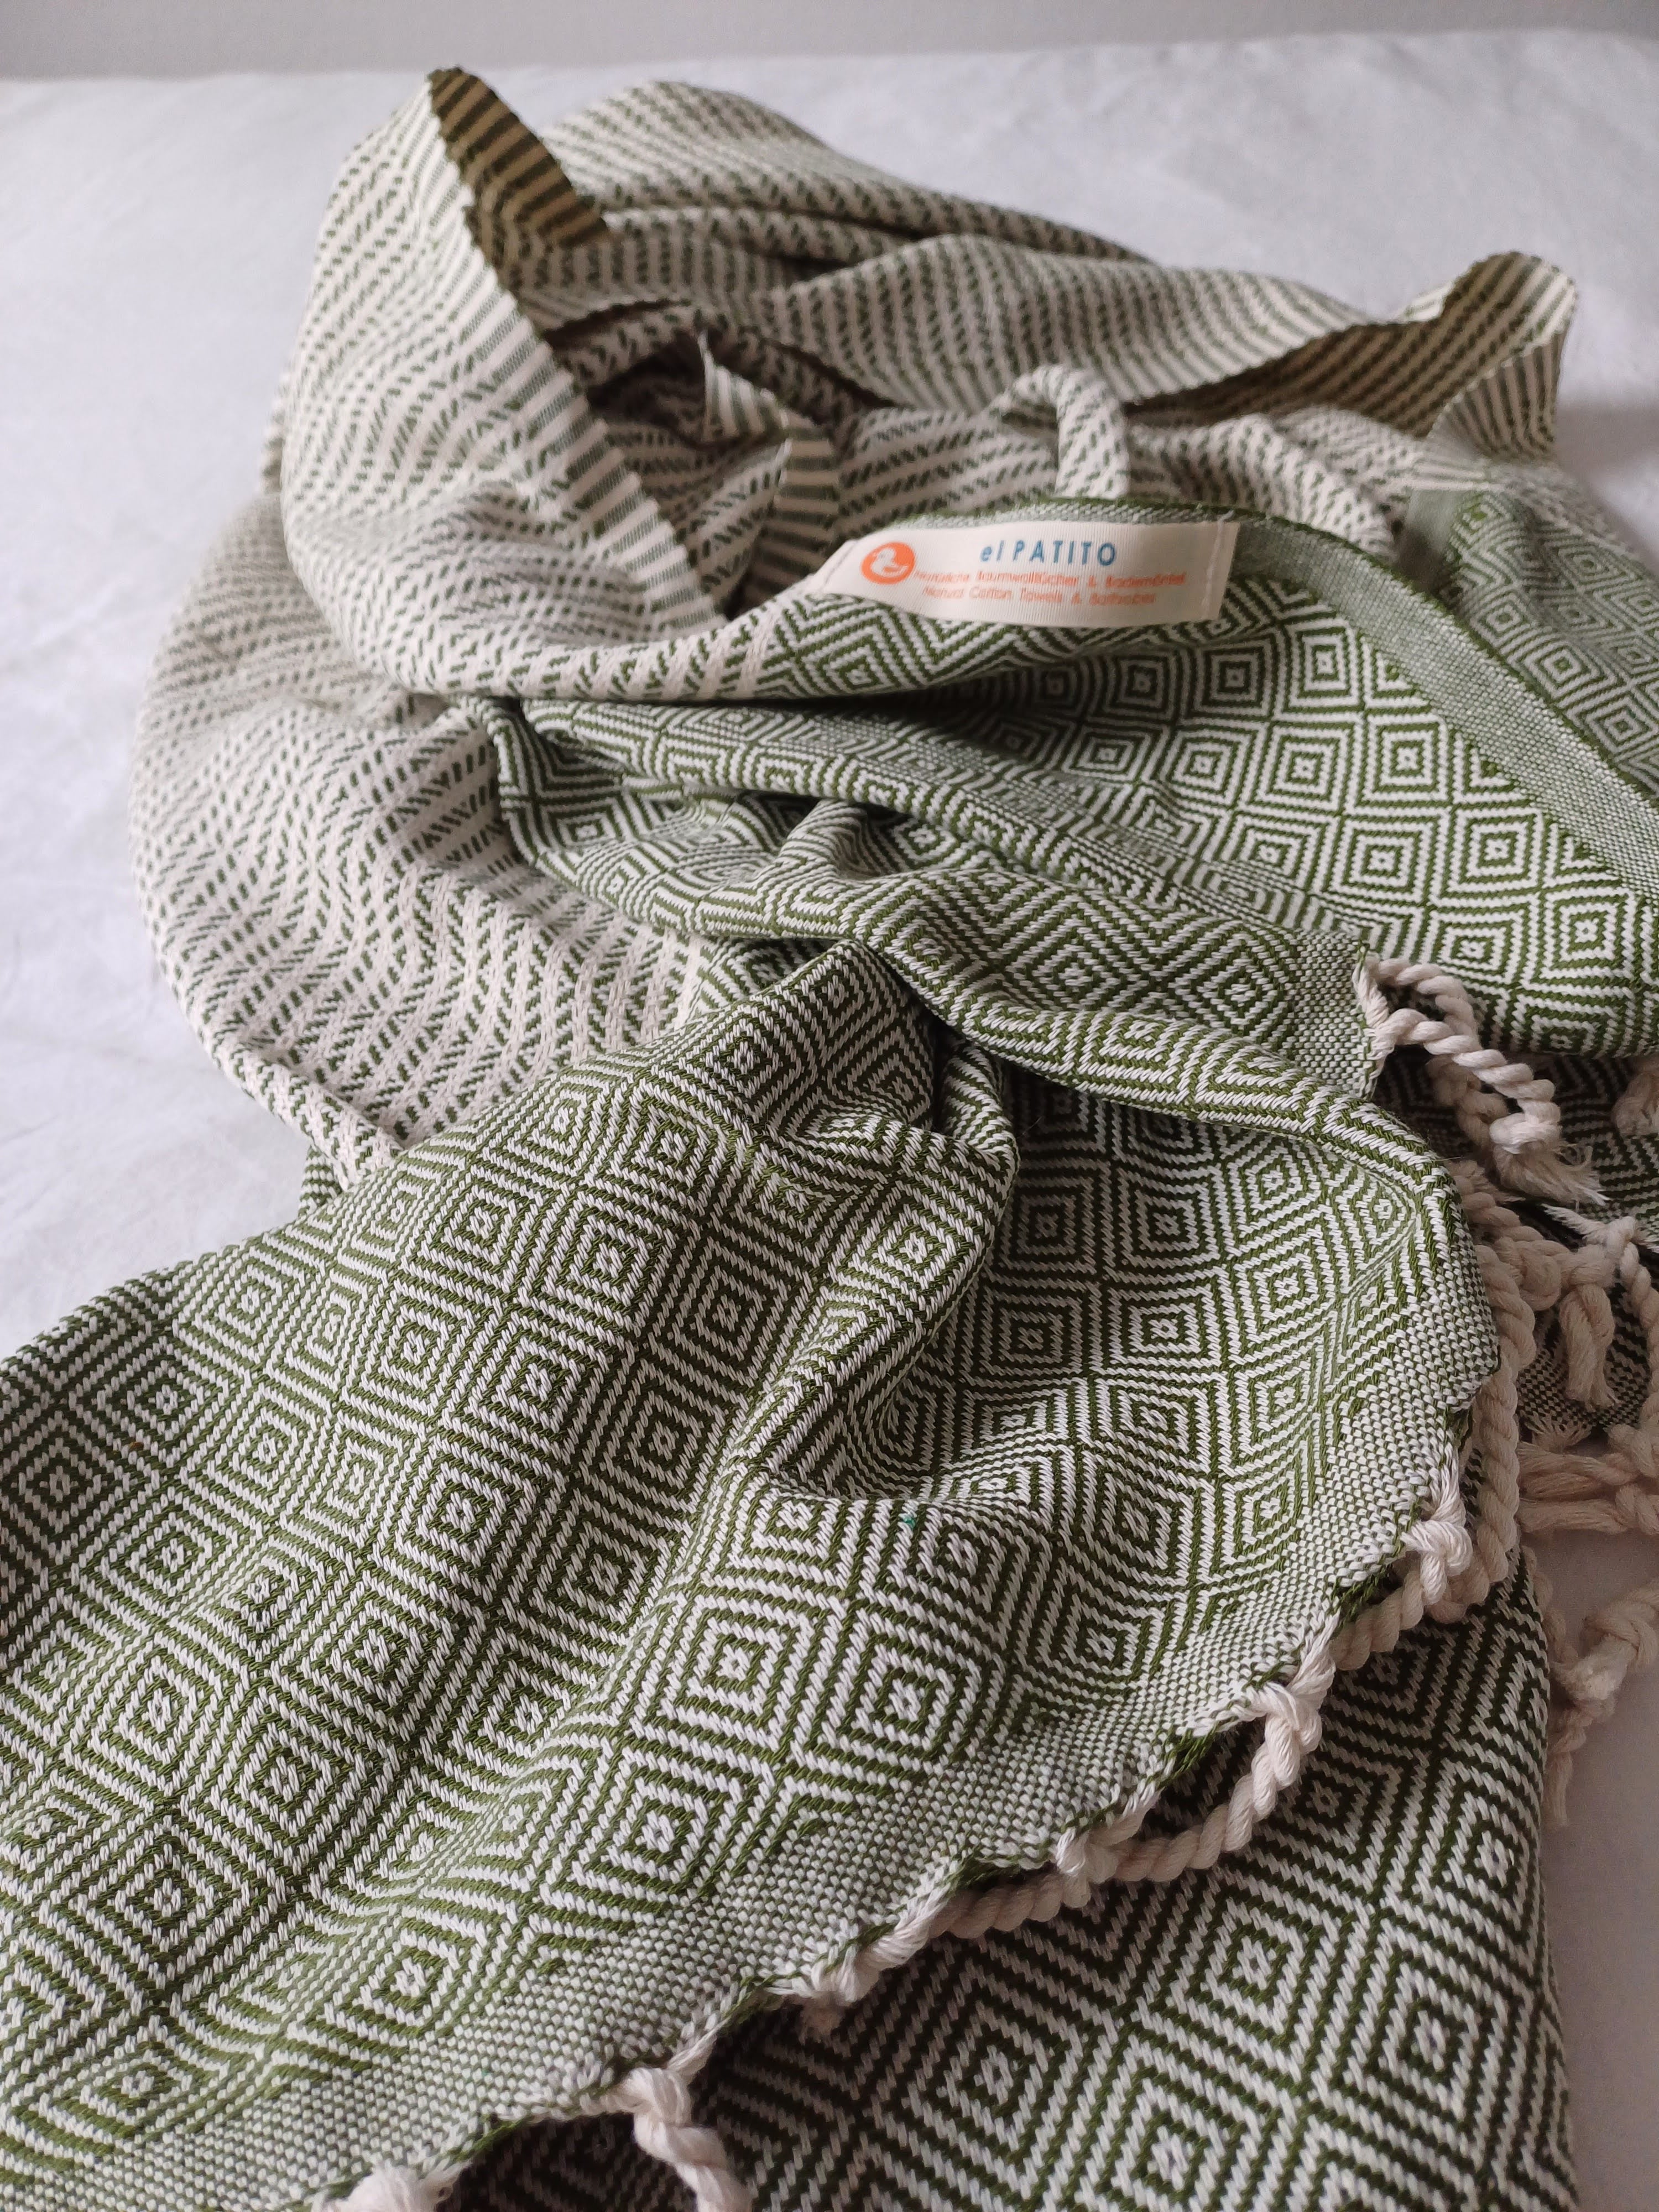 el patito towels and bathrobes 100% natural cotton turkish towels bath towels size 100 x 180 cm 39'' x 71" nordic series olivine green new color